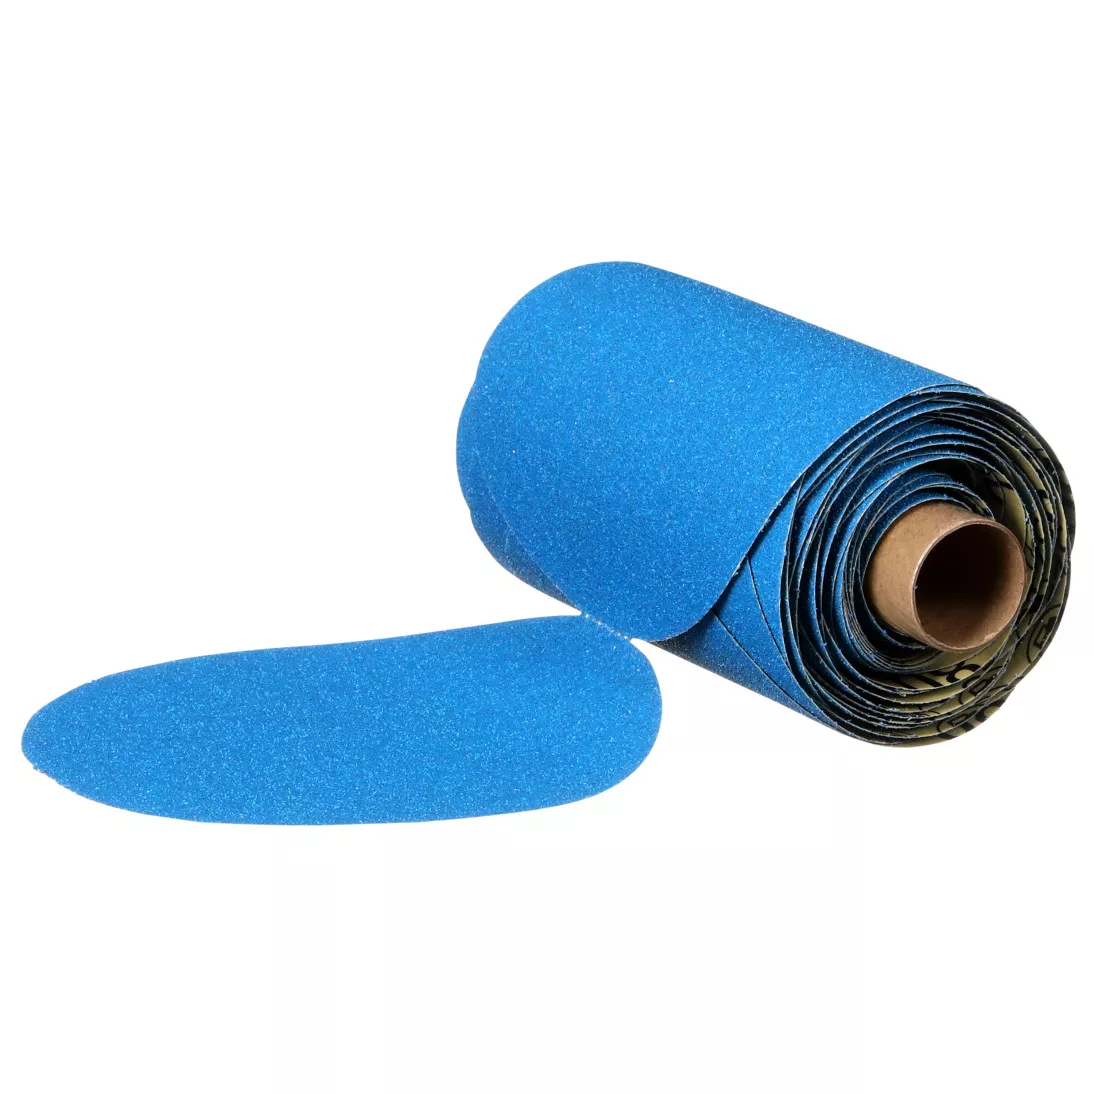 3M™ Stikit™ Blue Abrasive Disc Roll, 36265, 5 in, 80 grade, No Hole, 50 discs per roll, 5 rolls per case